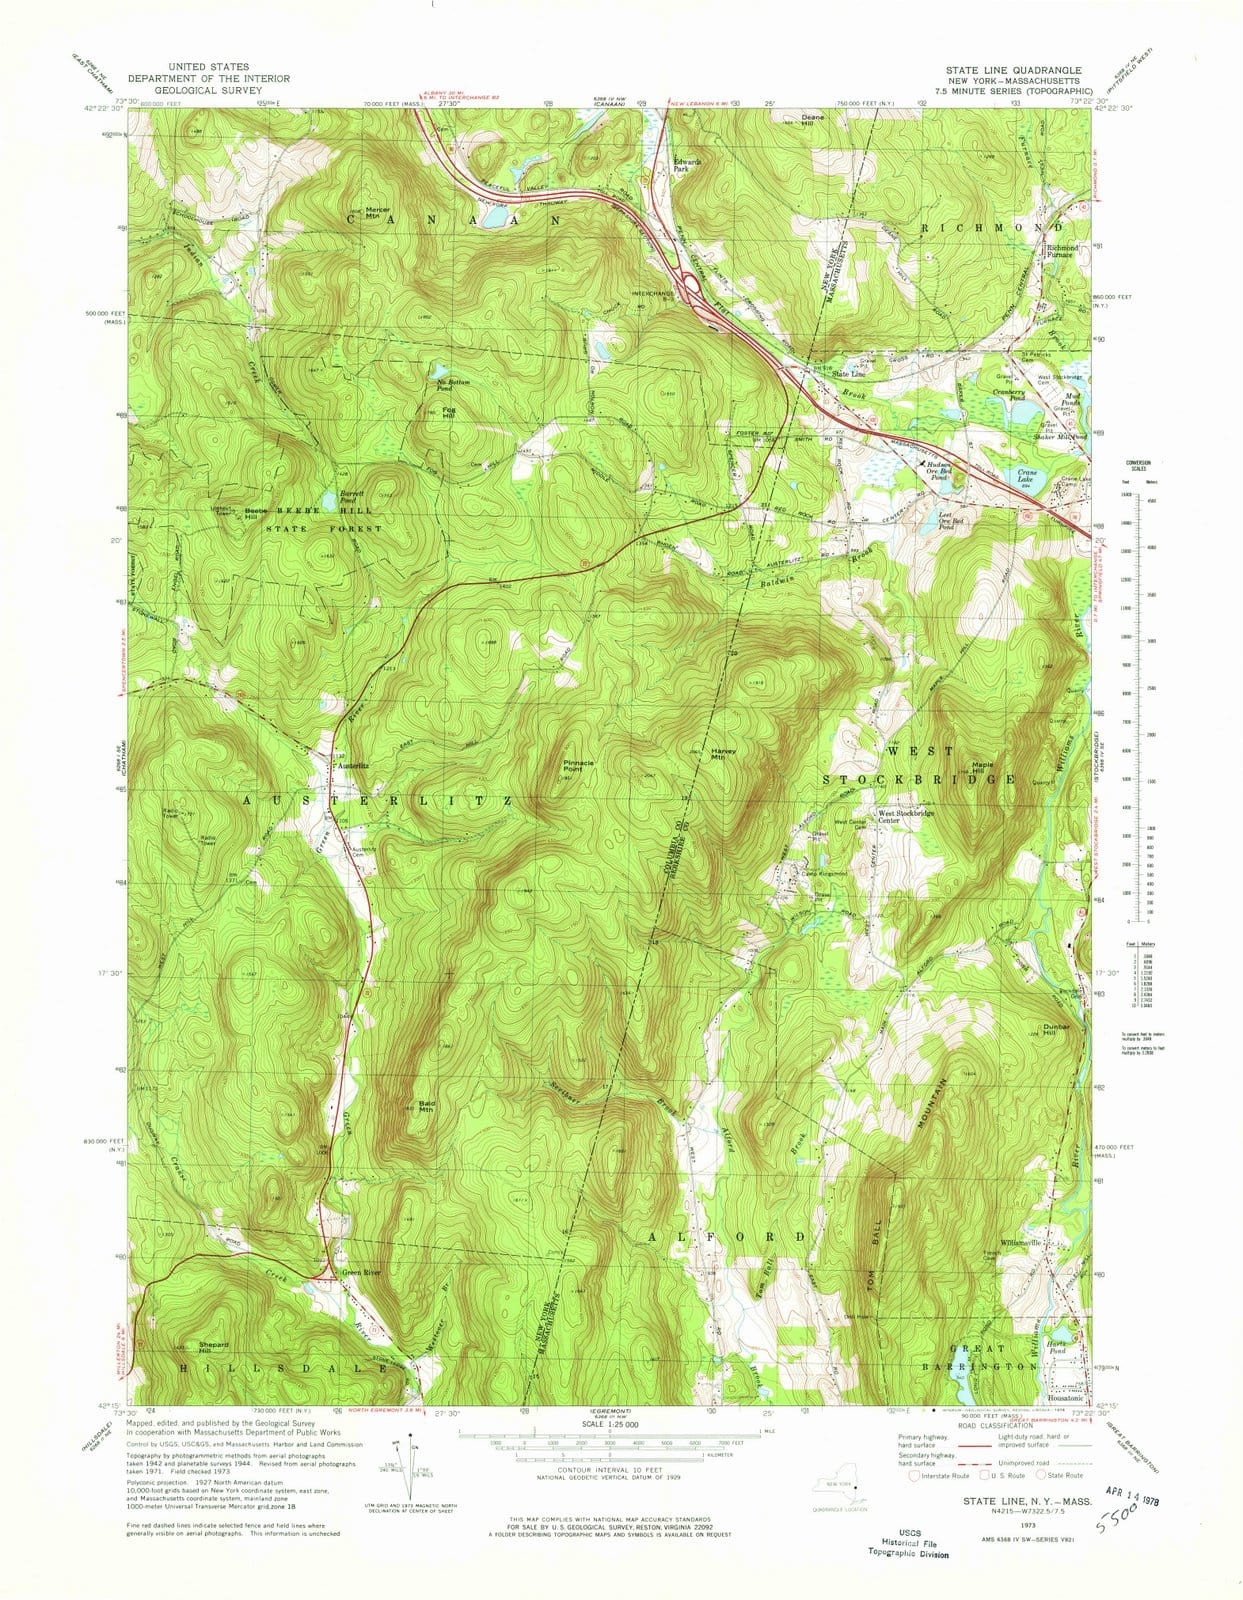 1973 State Line, MA - Massachusetts - USGS Topographic Map